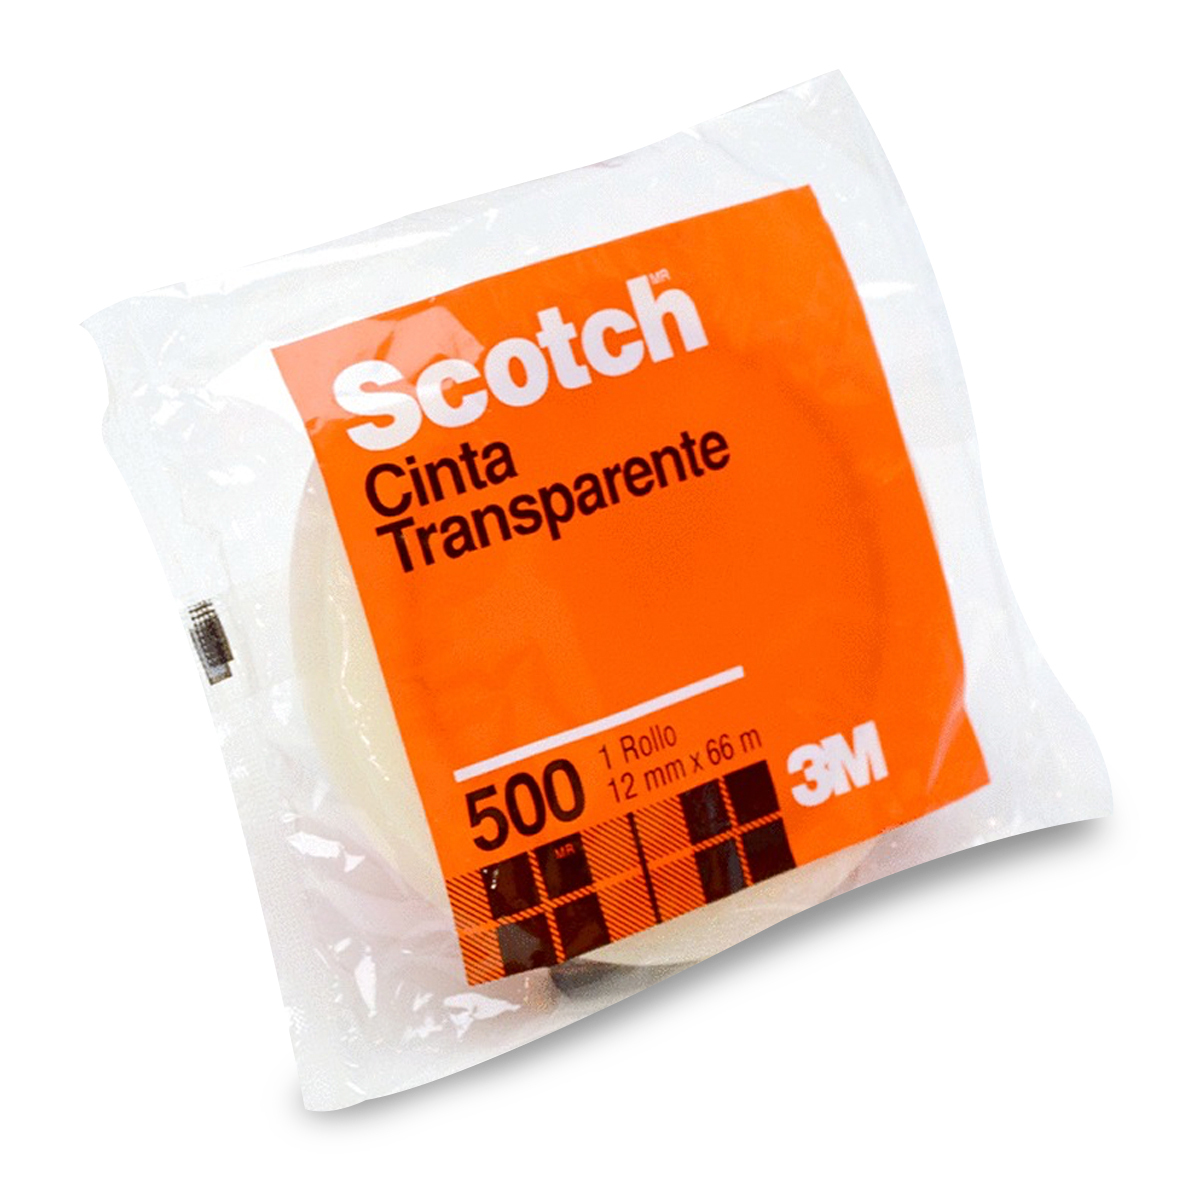 Cinta Adhesiva 3M Scotch 500 / Transparente / 12 mm x 66 m / 1 pieza